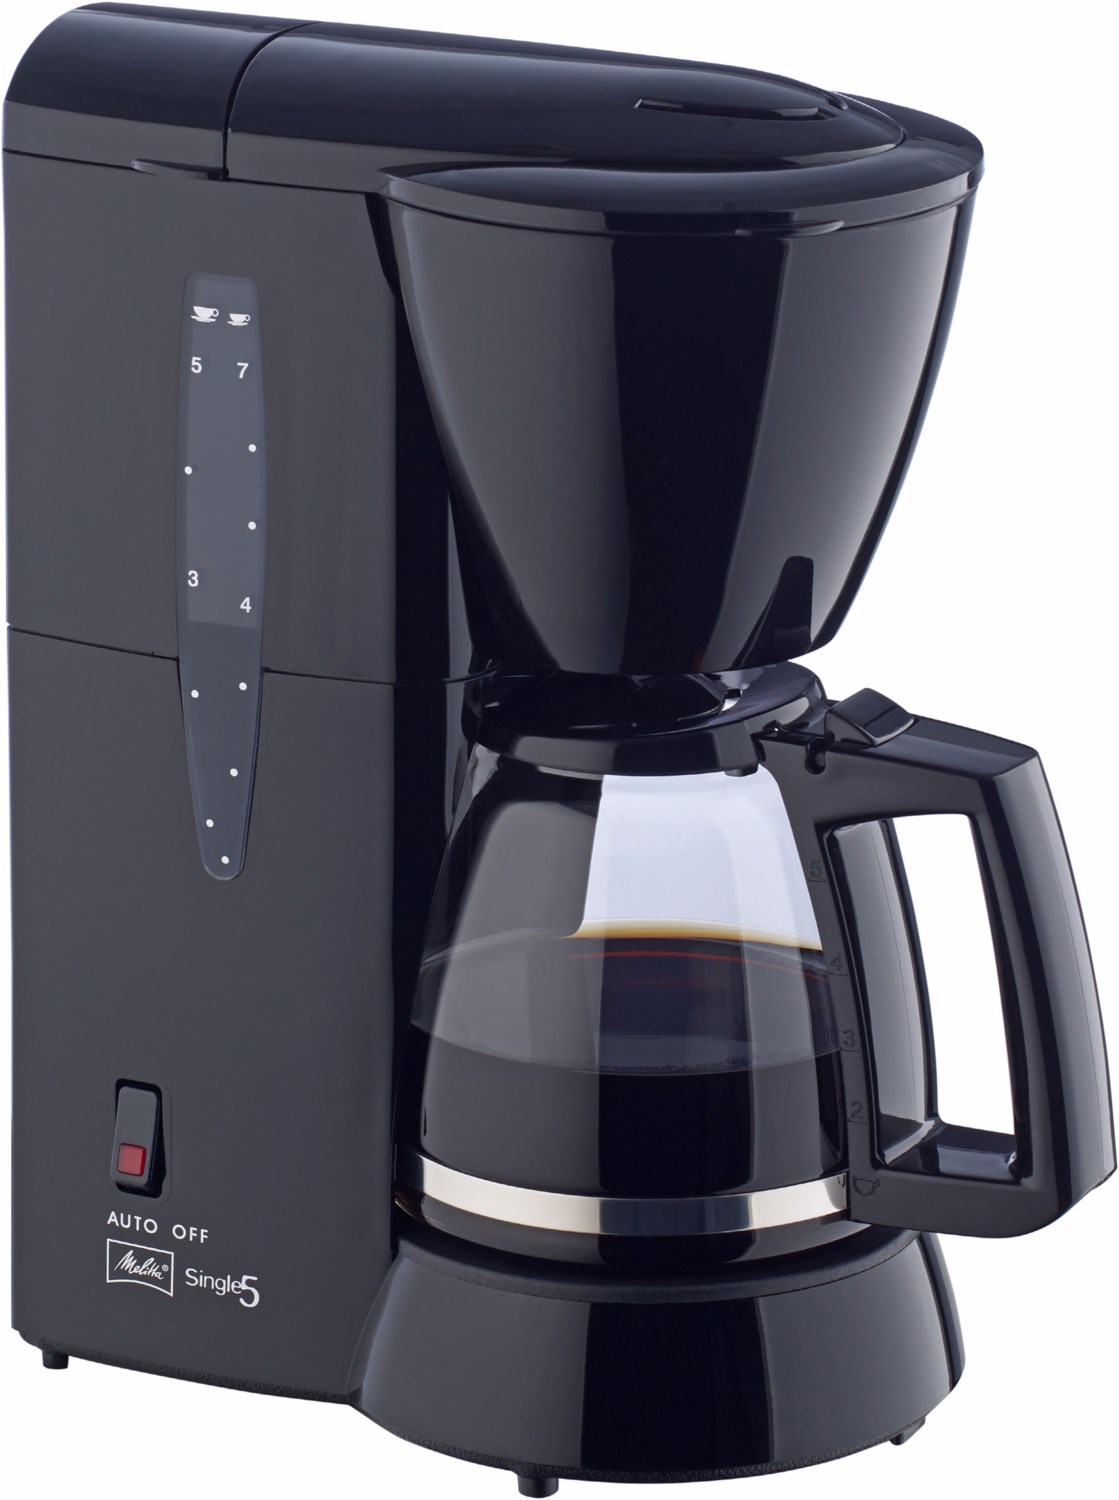 Single 5 M 720-1/2 Kaffeeautomat schwarz